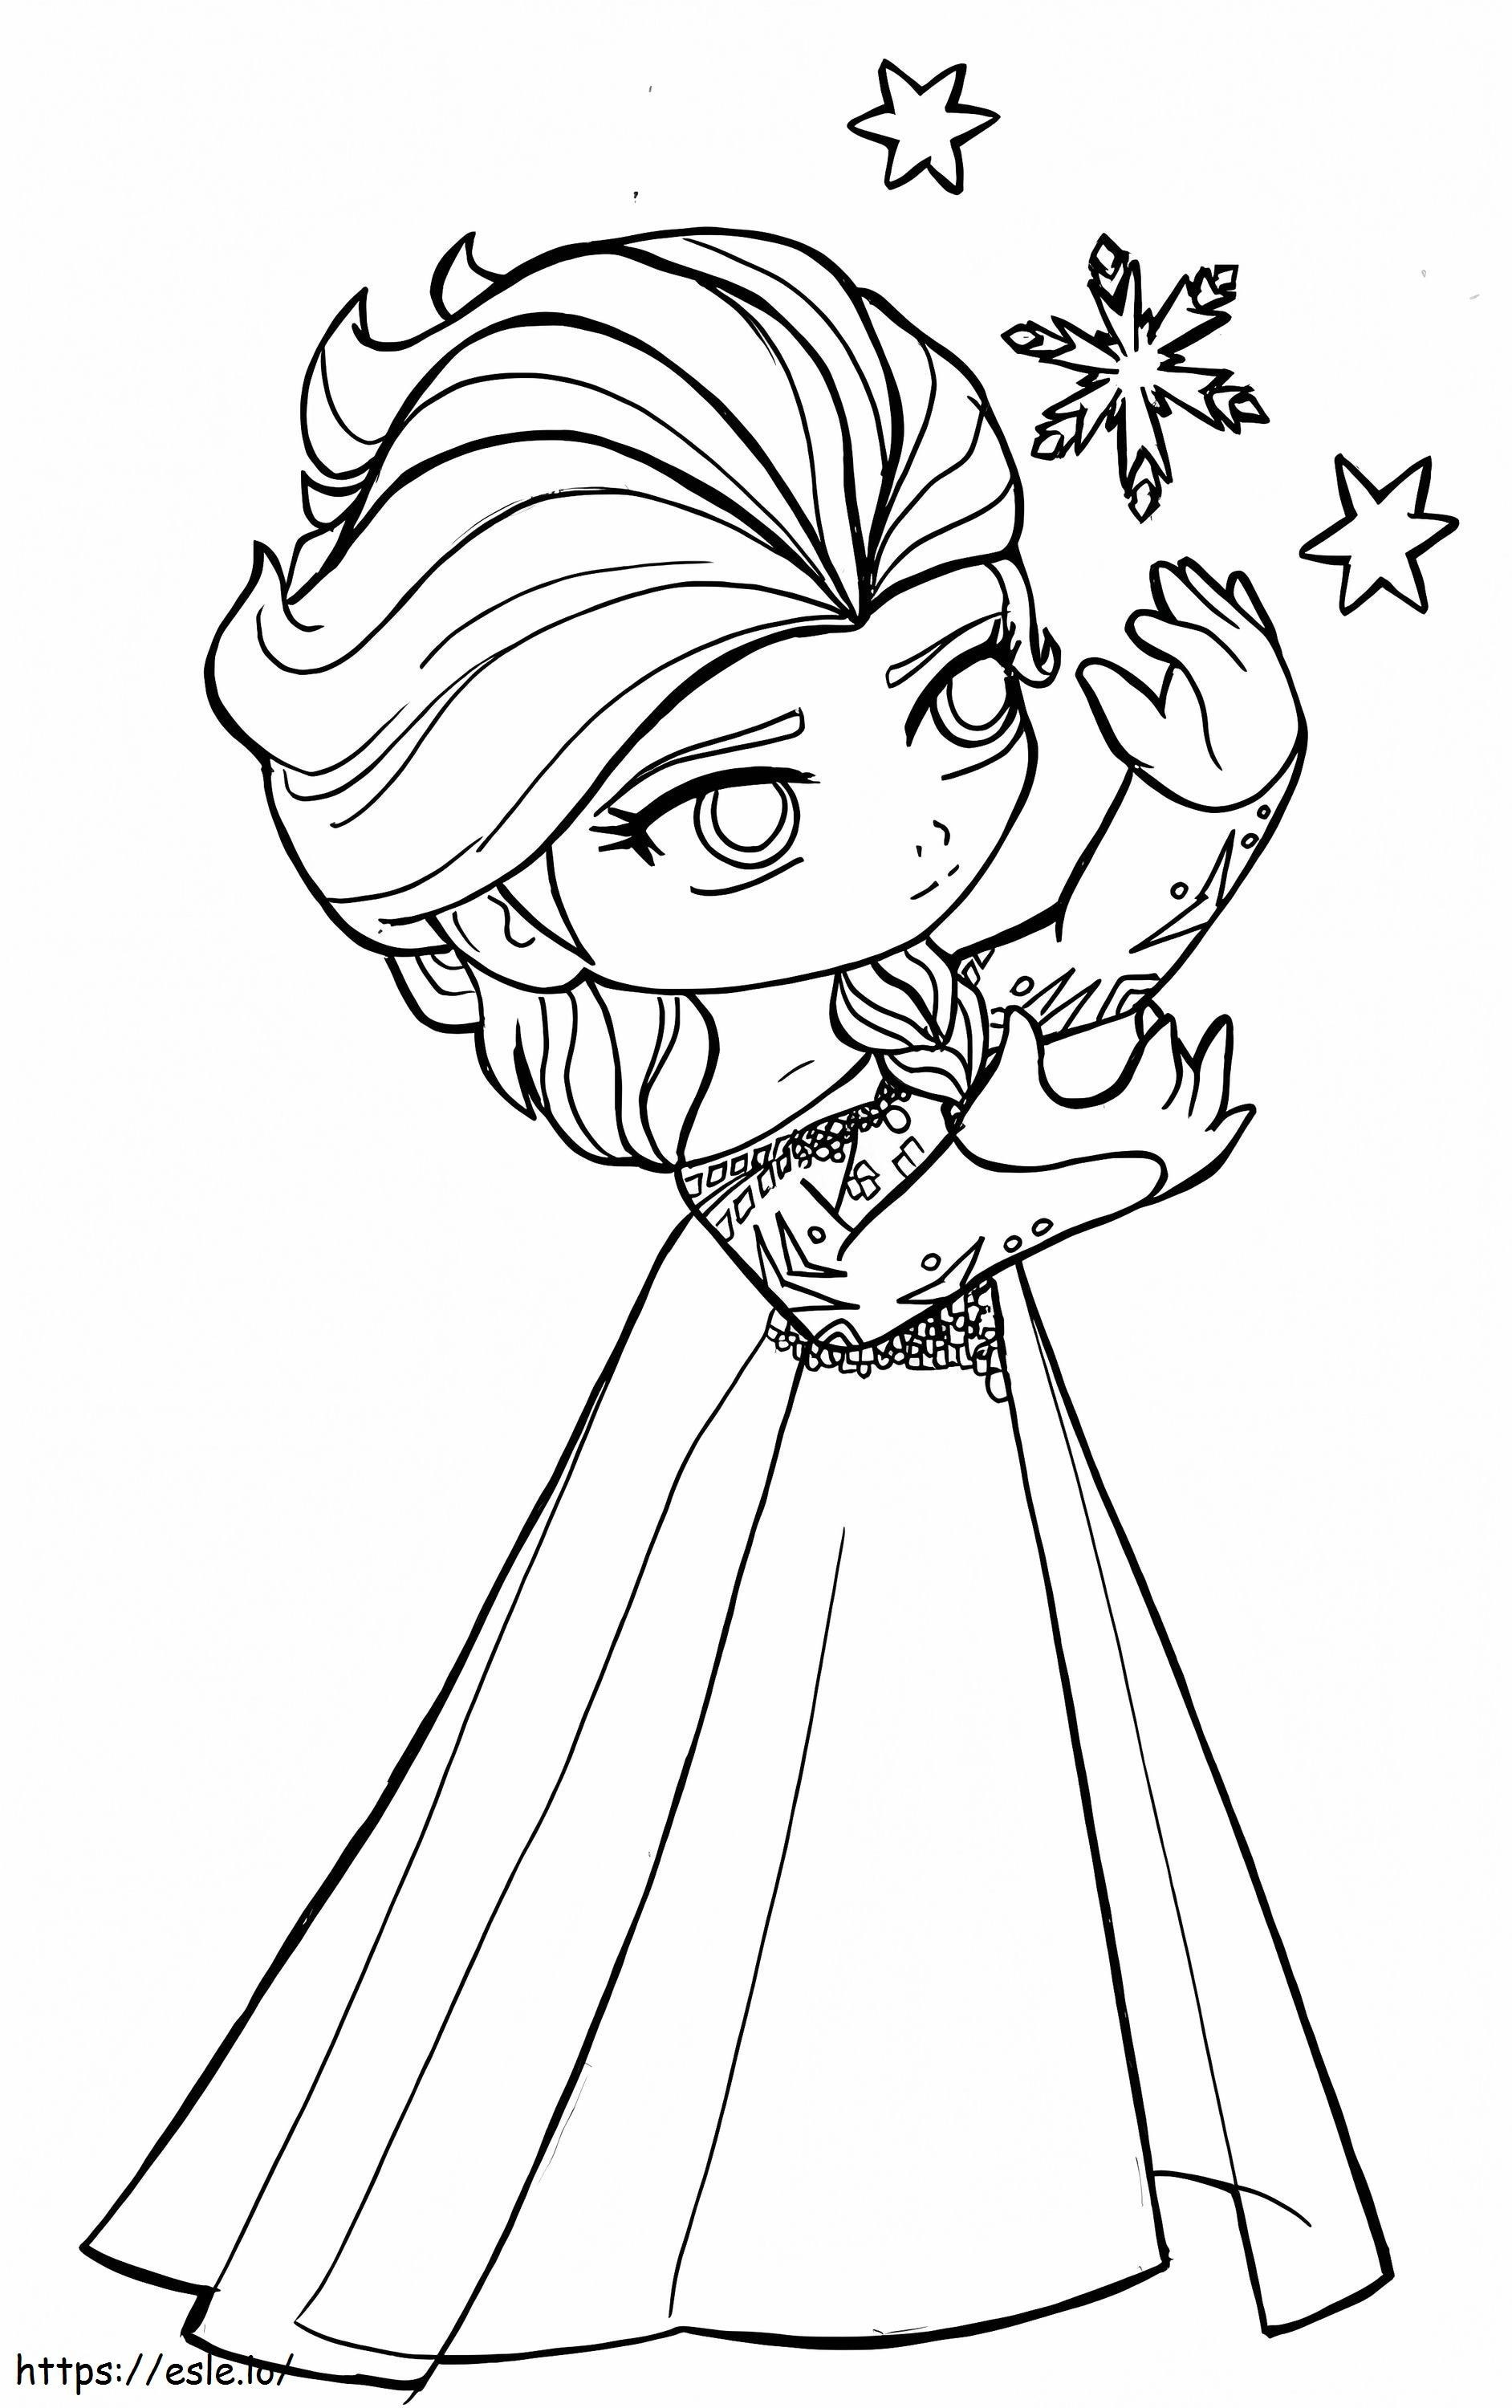 Cute Elsa coloring page